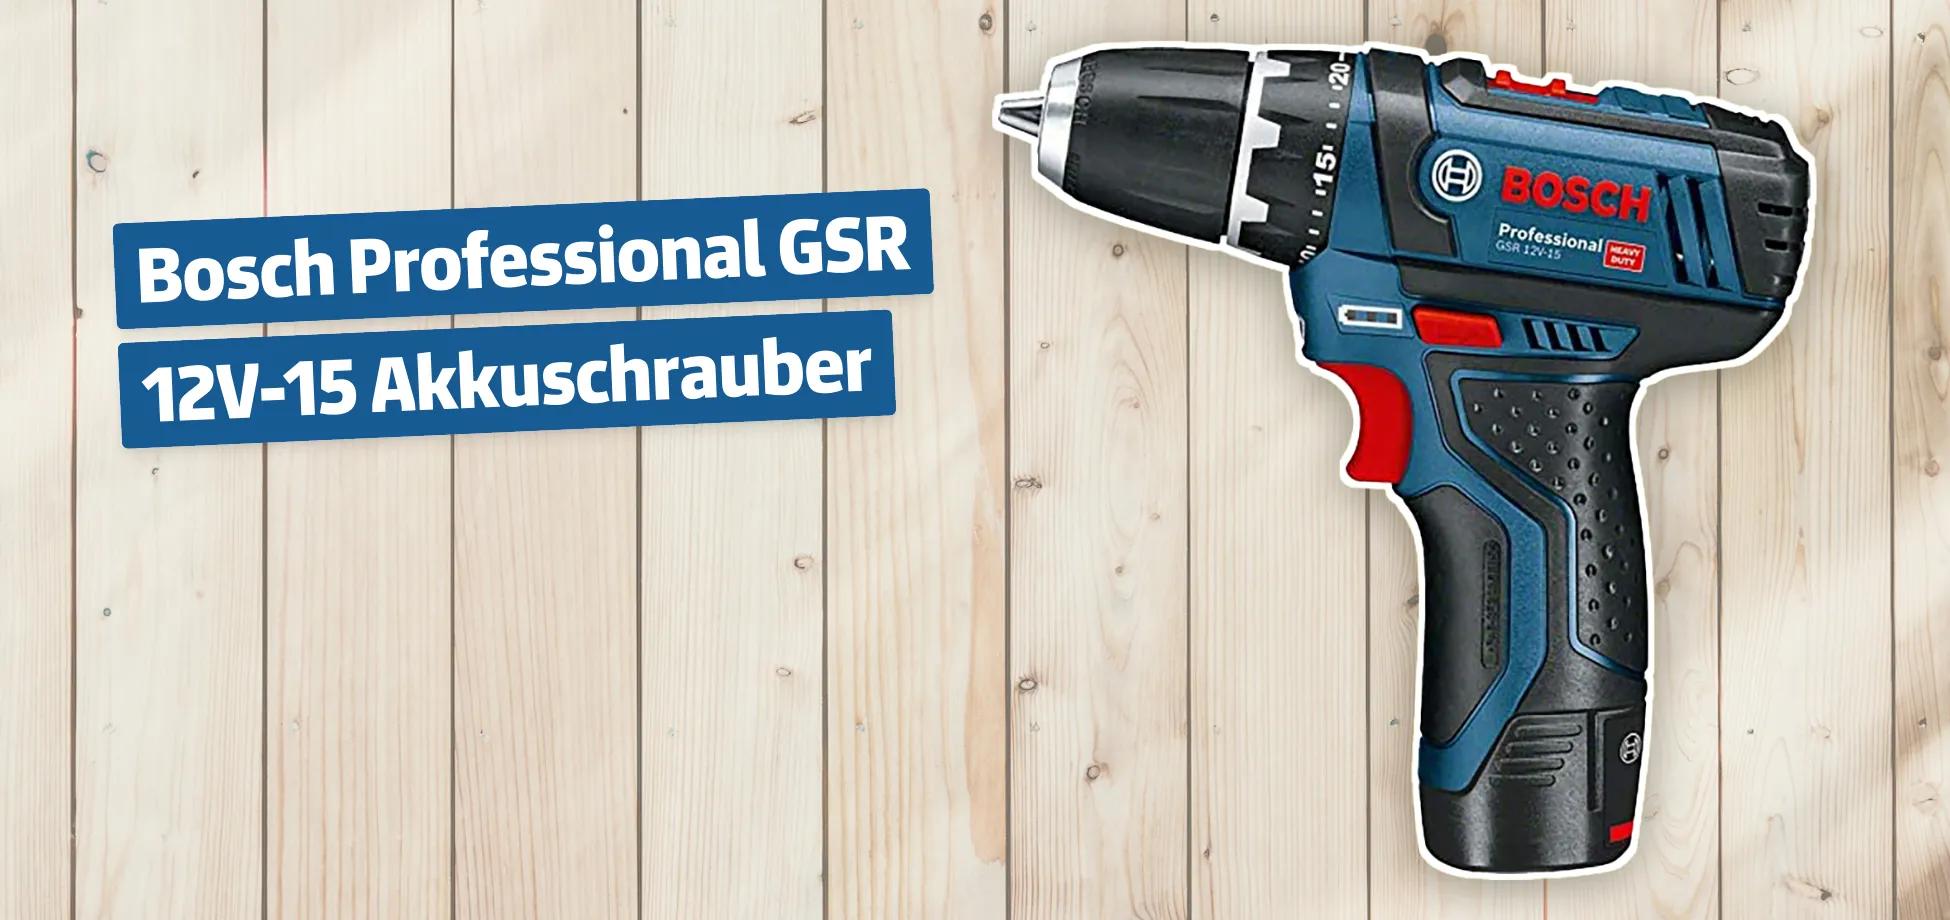 Bosch Professional GSR 12V-15 Akkuschrauber